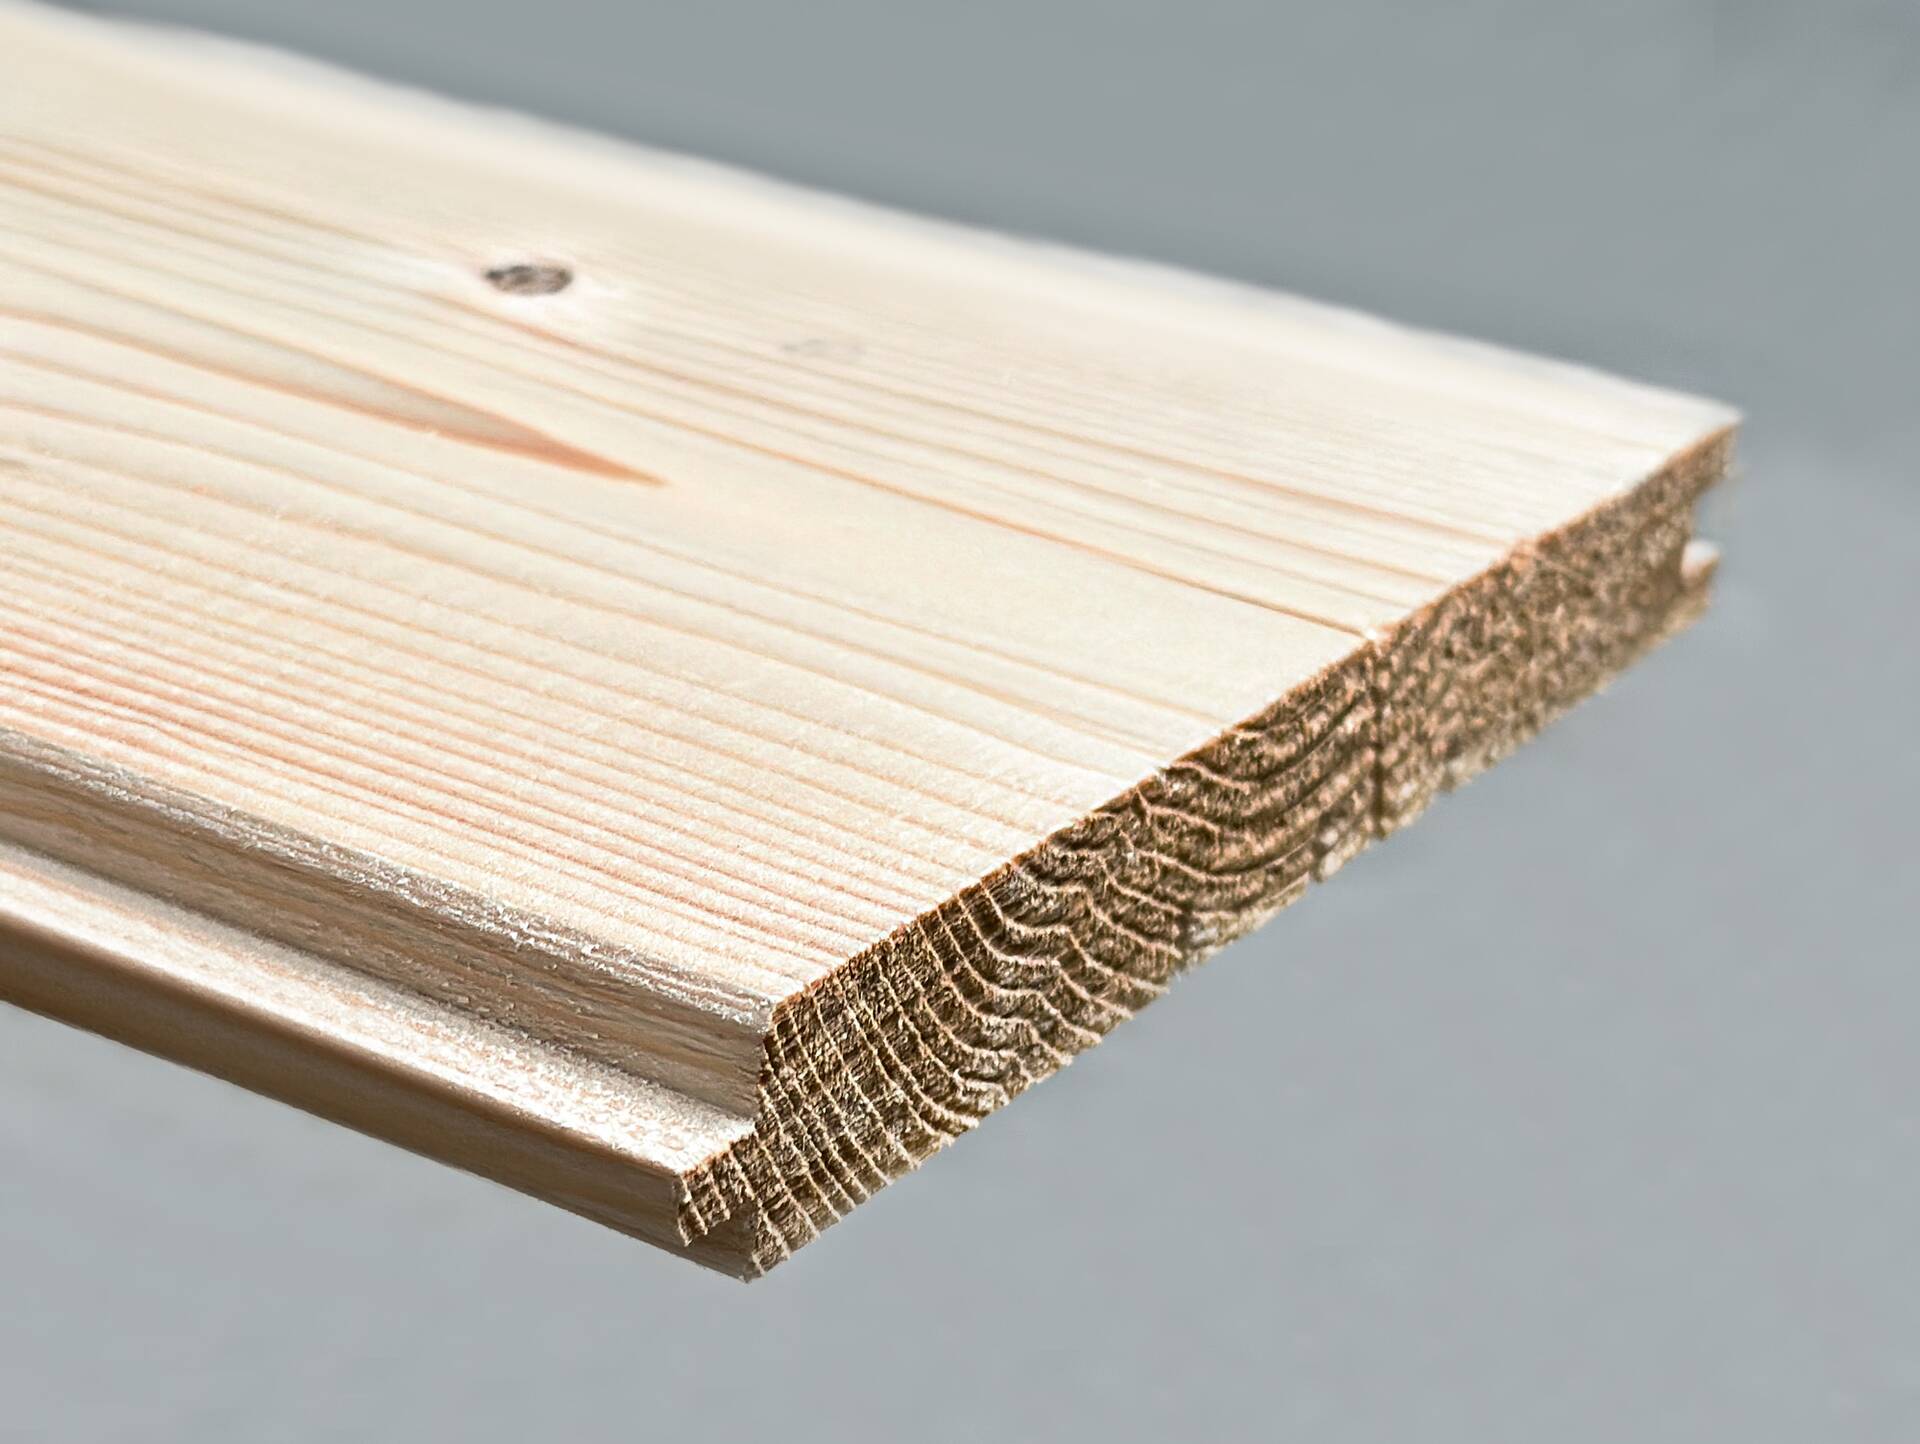 Nut- und Federbretter, Fichte gehobelt, Material Massivholz, verschiedene Längen erhältlich 19 mm | 1 Meter